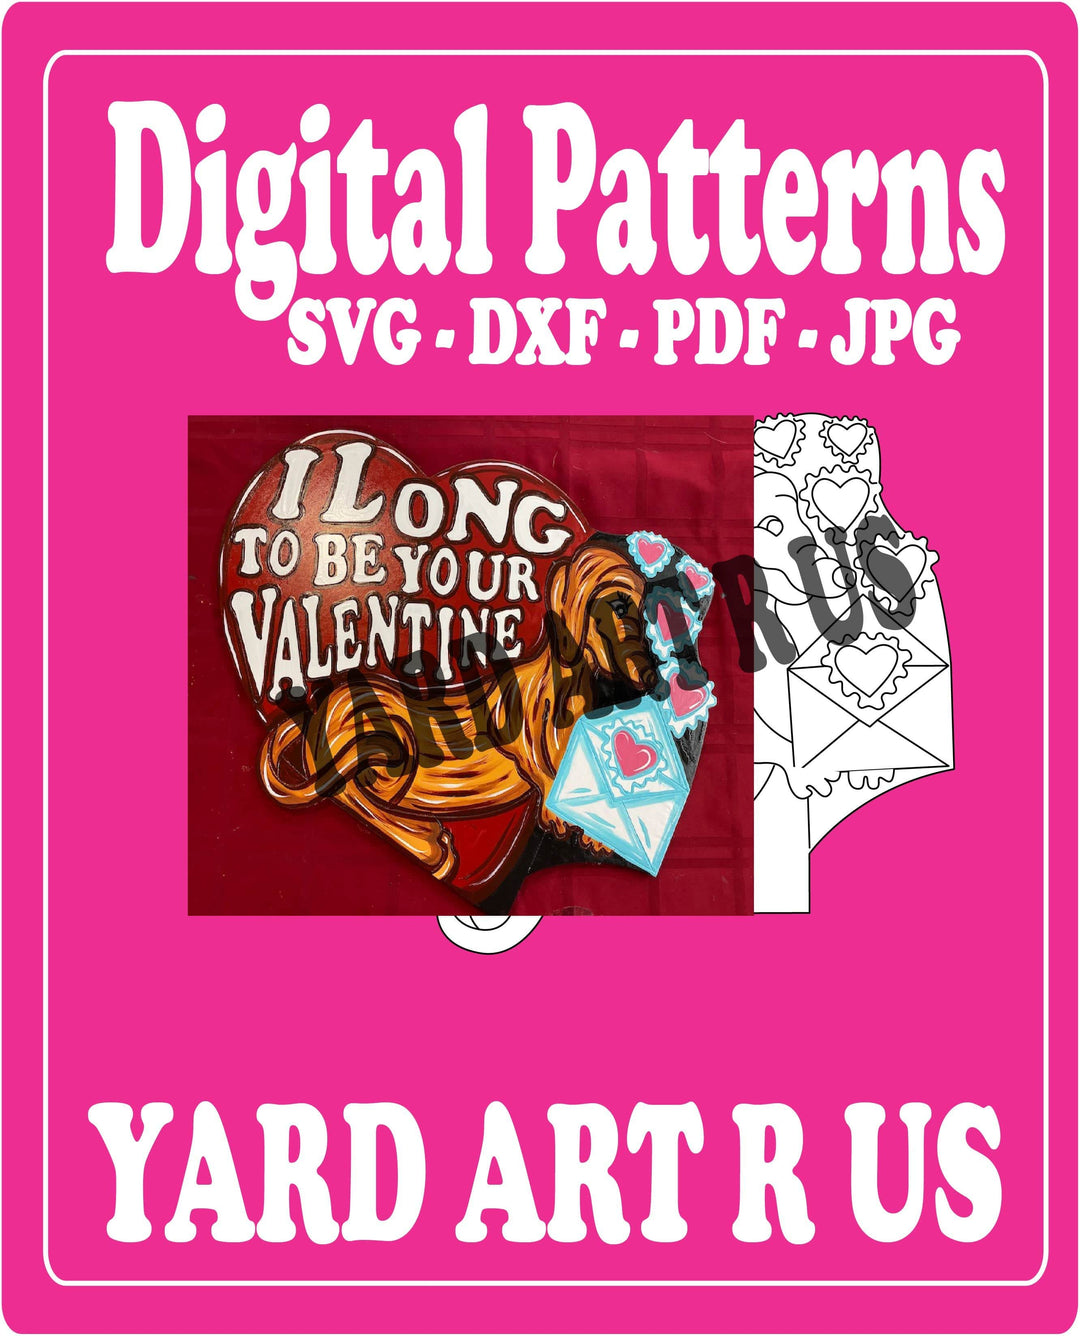 Weiner dog Valentine digital pattern; SVG, DXF, PDF, and JPG file options